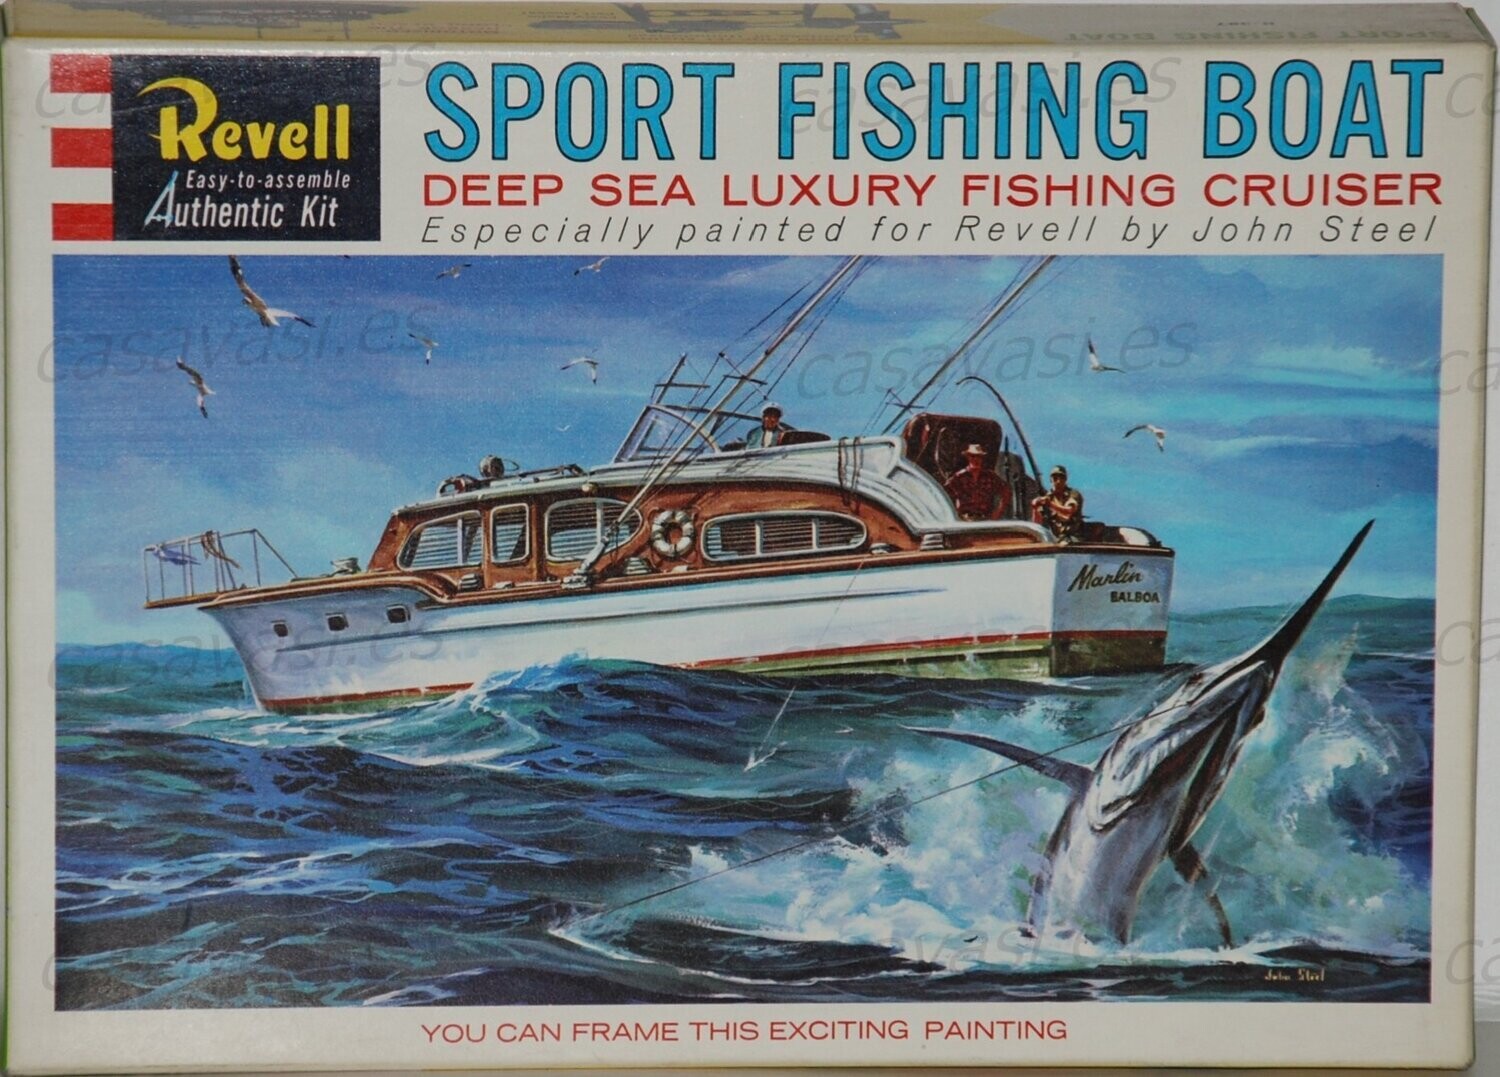 Made in G.B. - Revell - 1960 -H-387 - 1/56 - Sport Fishing Boat - Deep Sea Luxury Fishing Cruiser
Box Size 25.5 x 18 cm.